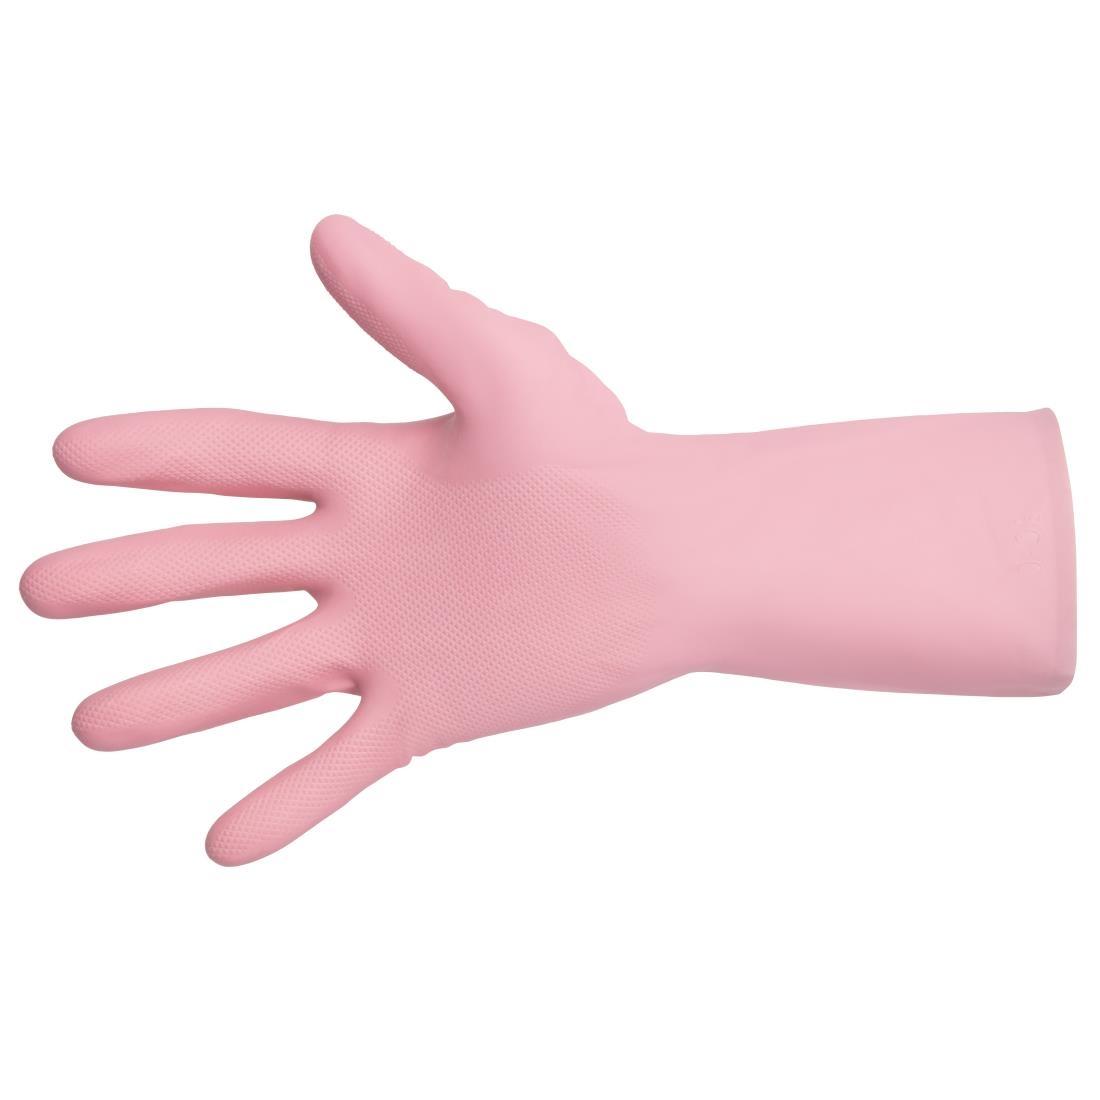 MAPA Vital 115 Liquid-Proof Light-Duty Janitorial Gloves Pink Extra Large - FA290-XL  - 1